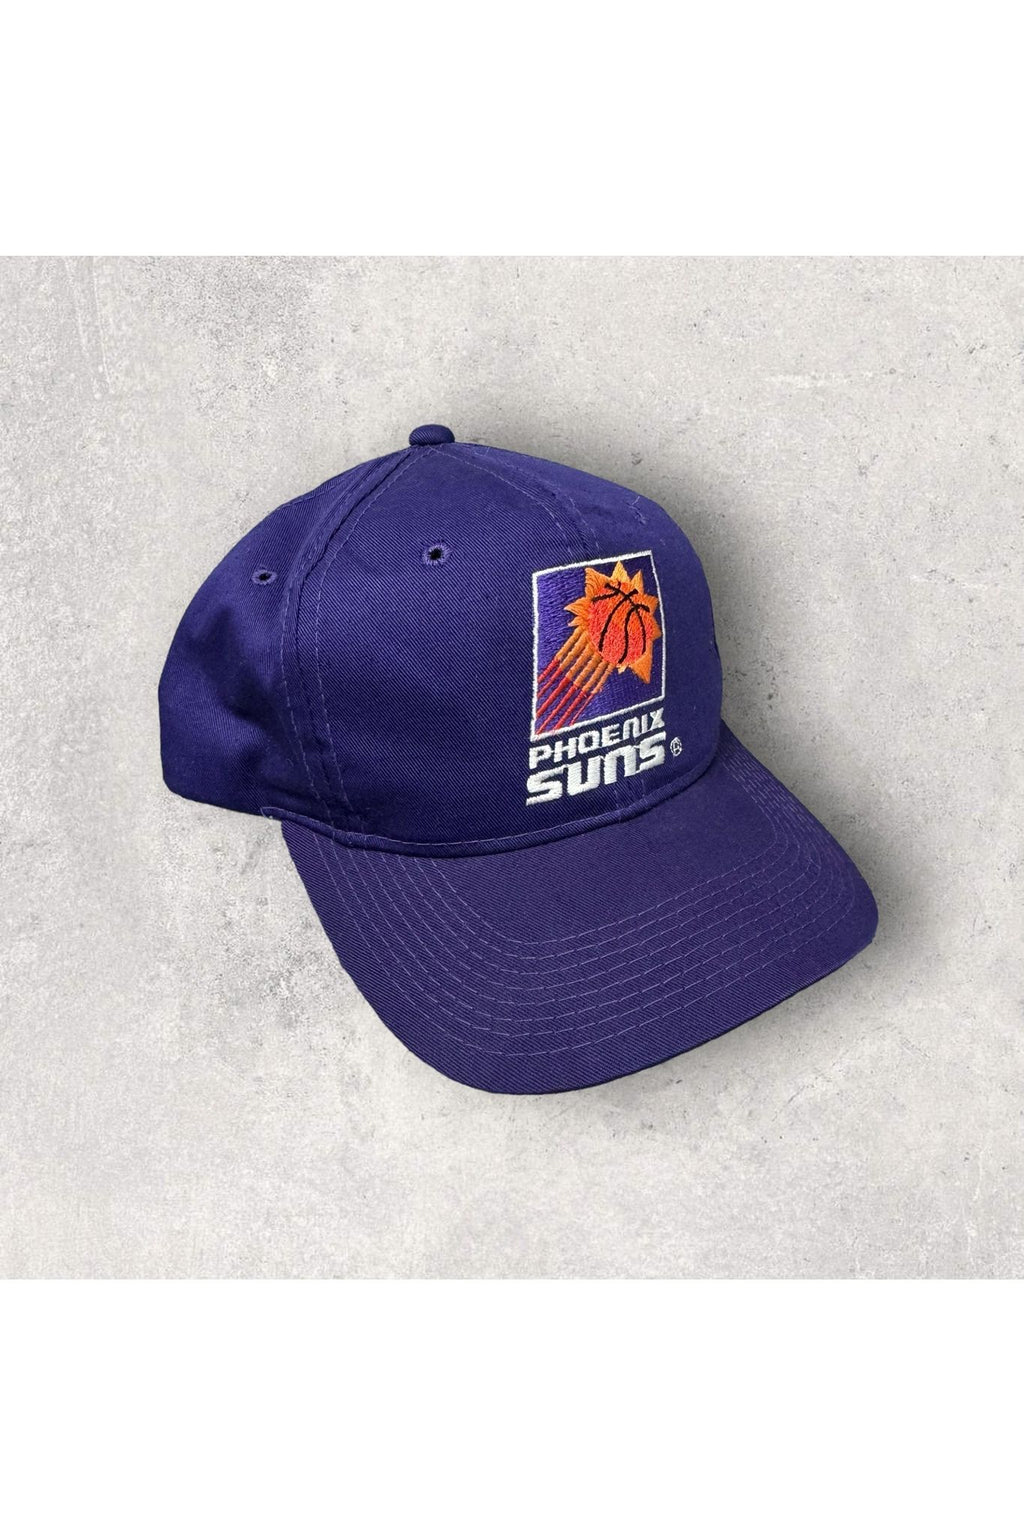 Vintage Youngan Phoenix Suns Snapback